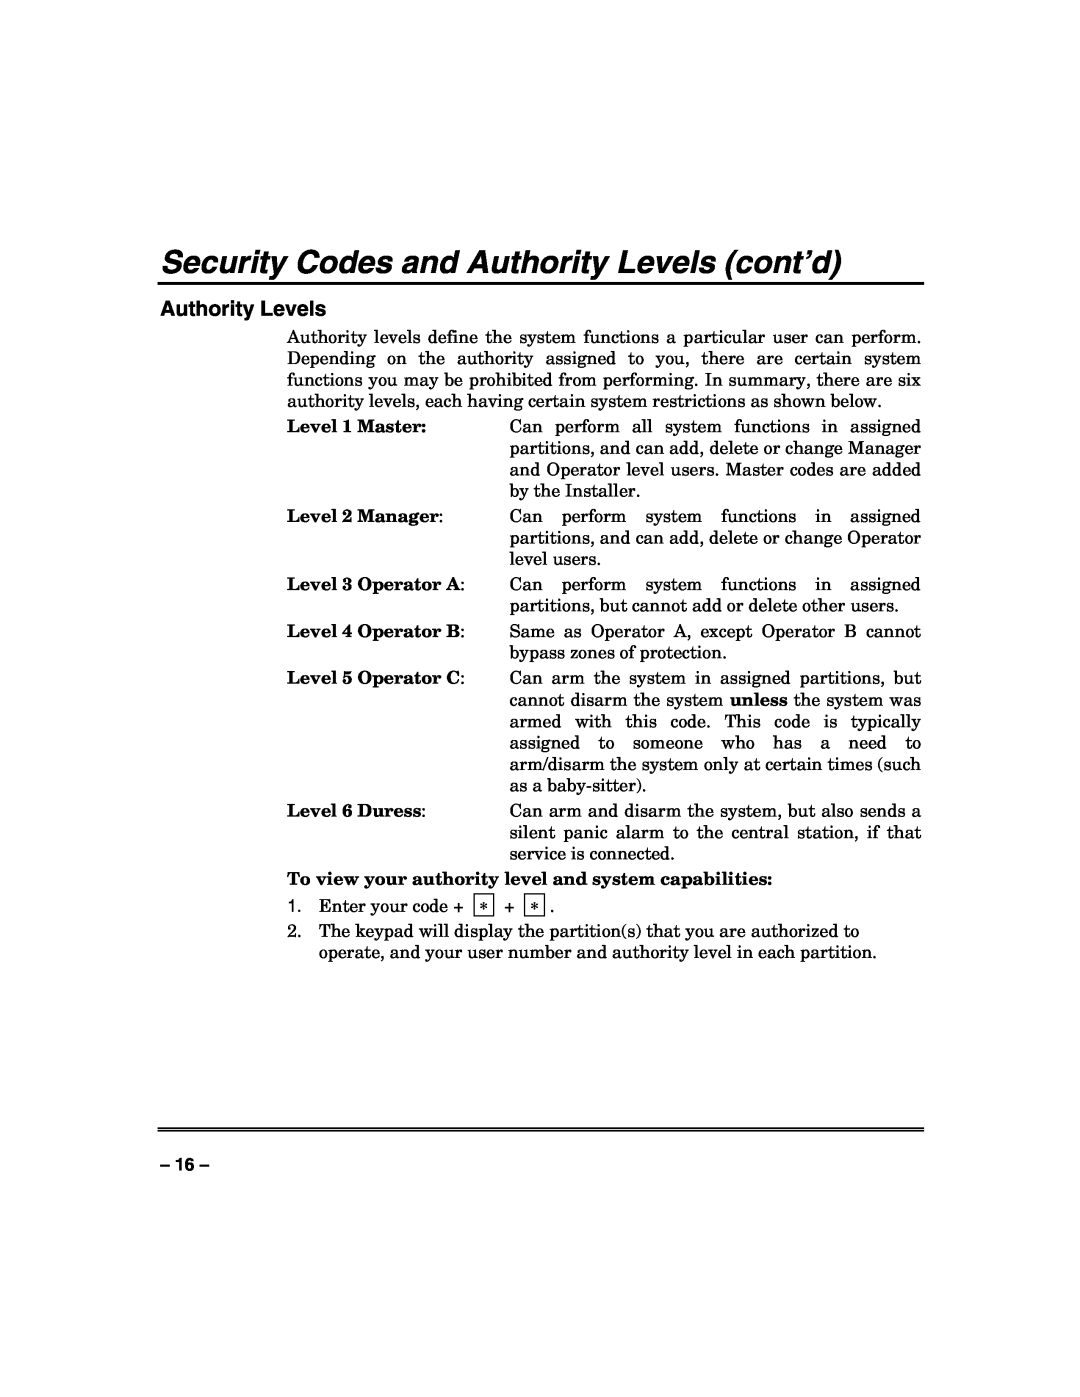 Honeywell VISTA128BPT, VISTA250BPT, 128BPTSIA manual Security Codes and Authority Levels cont’d 